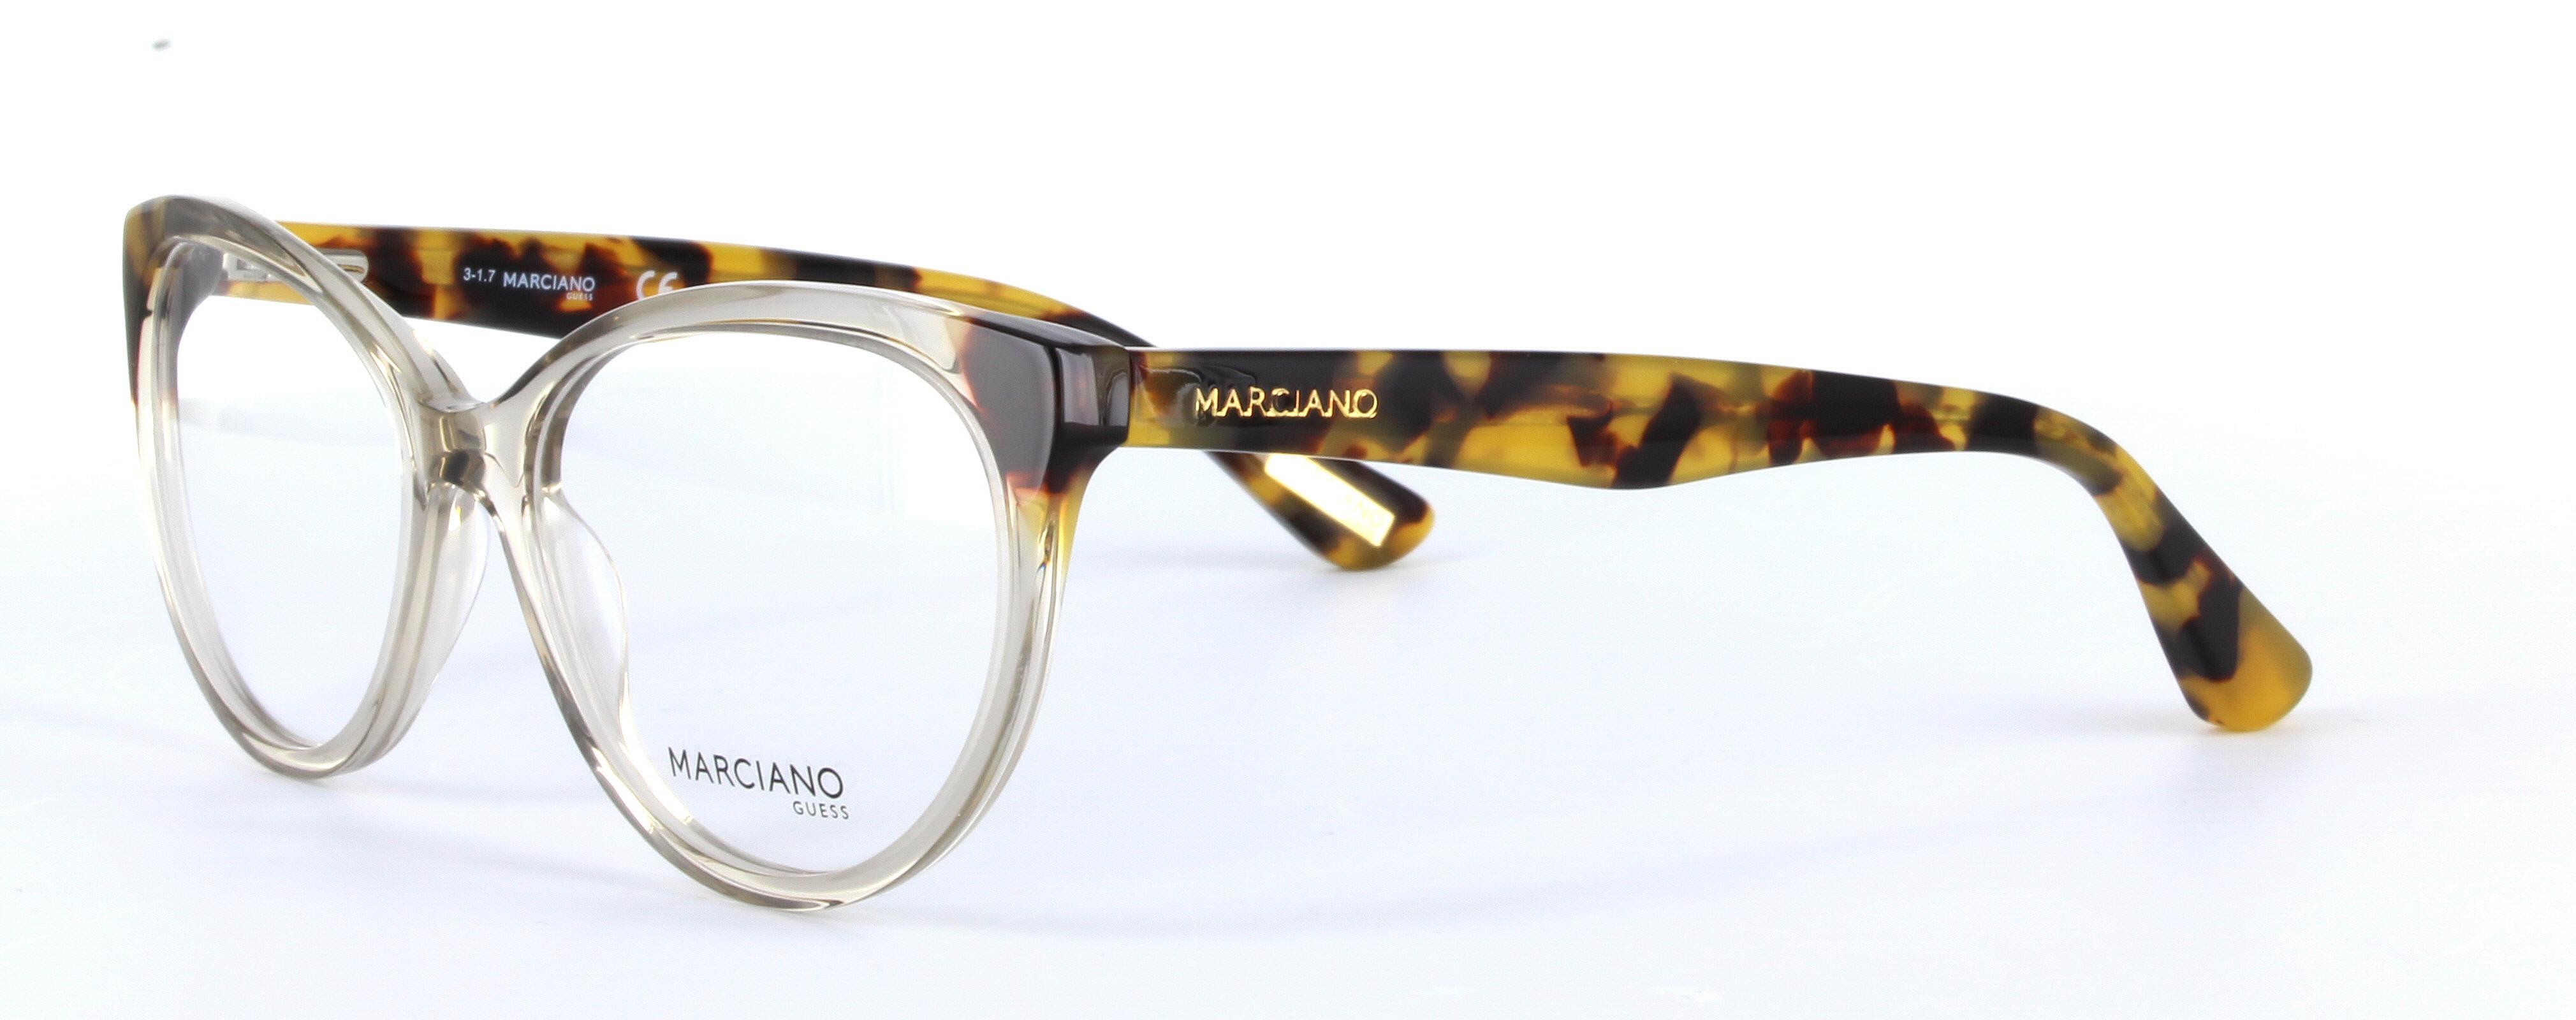 GUESS MARCIANO (GM0315-020) Tortoise Full Rim Cat Eye Acetate Glasses - Image View 2